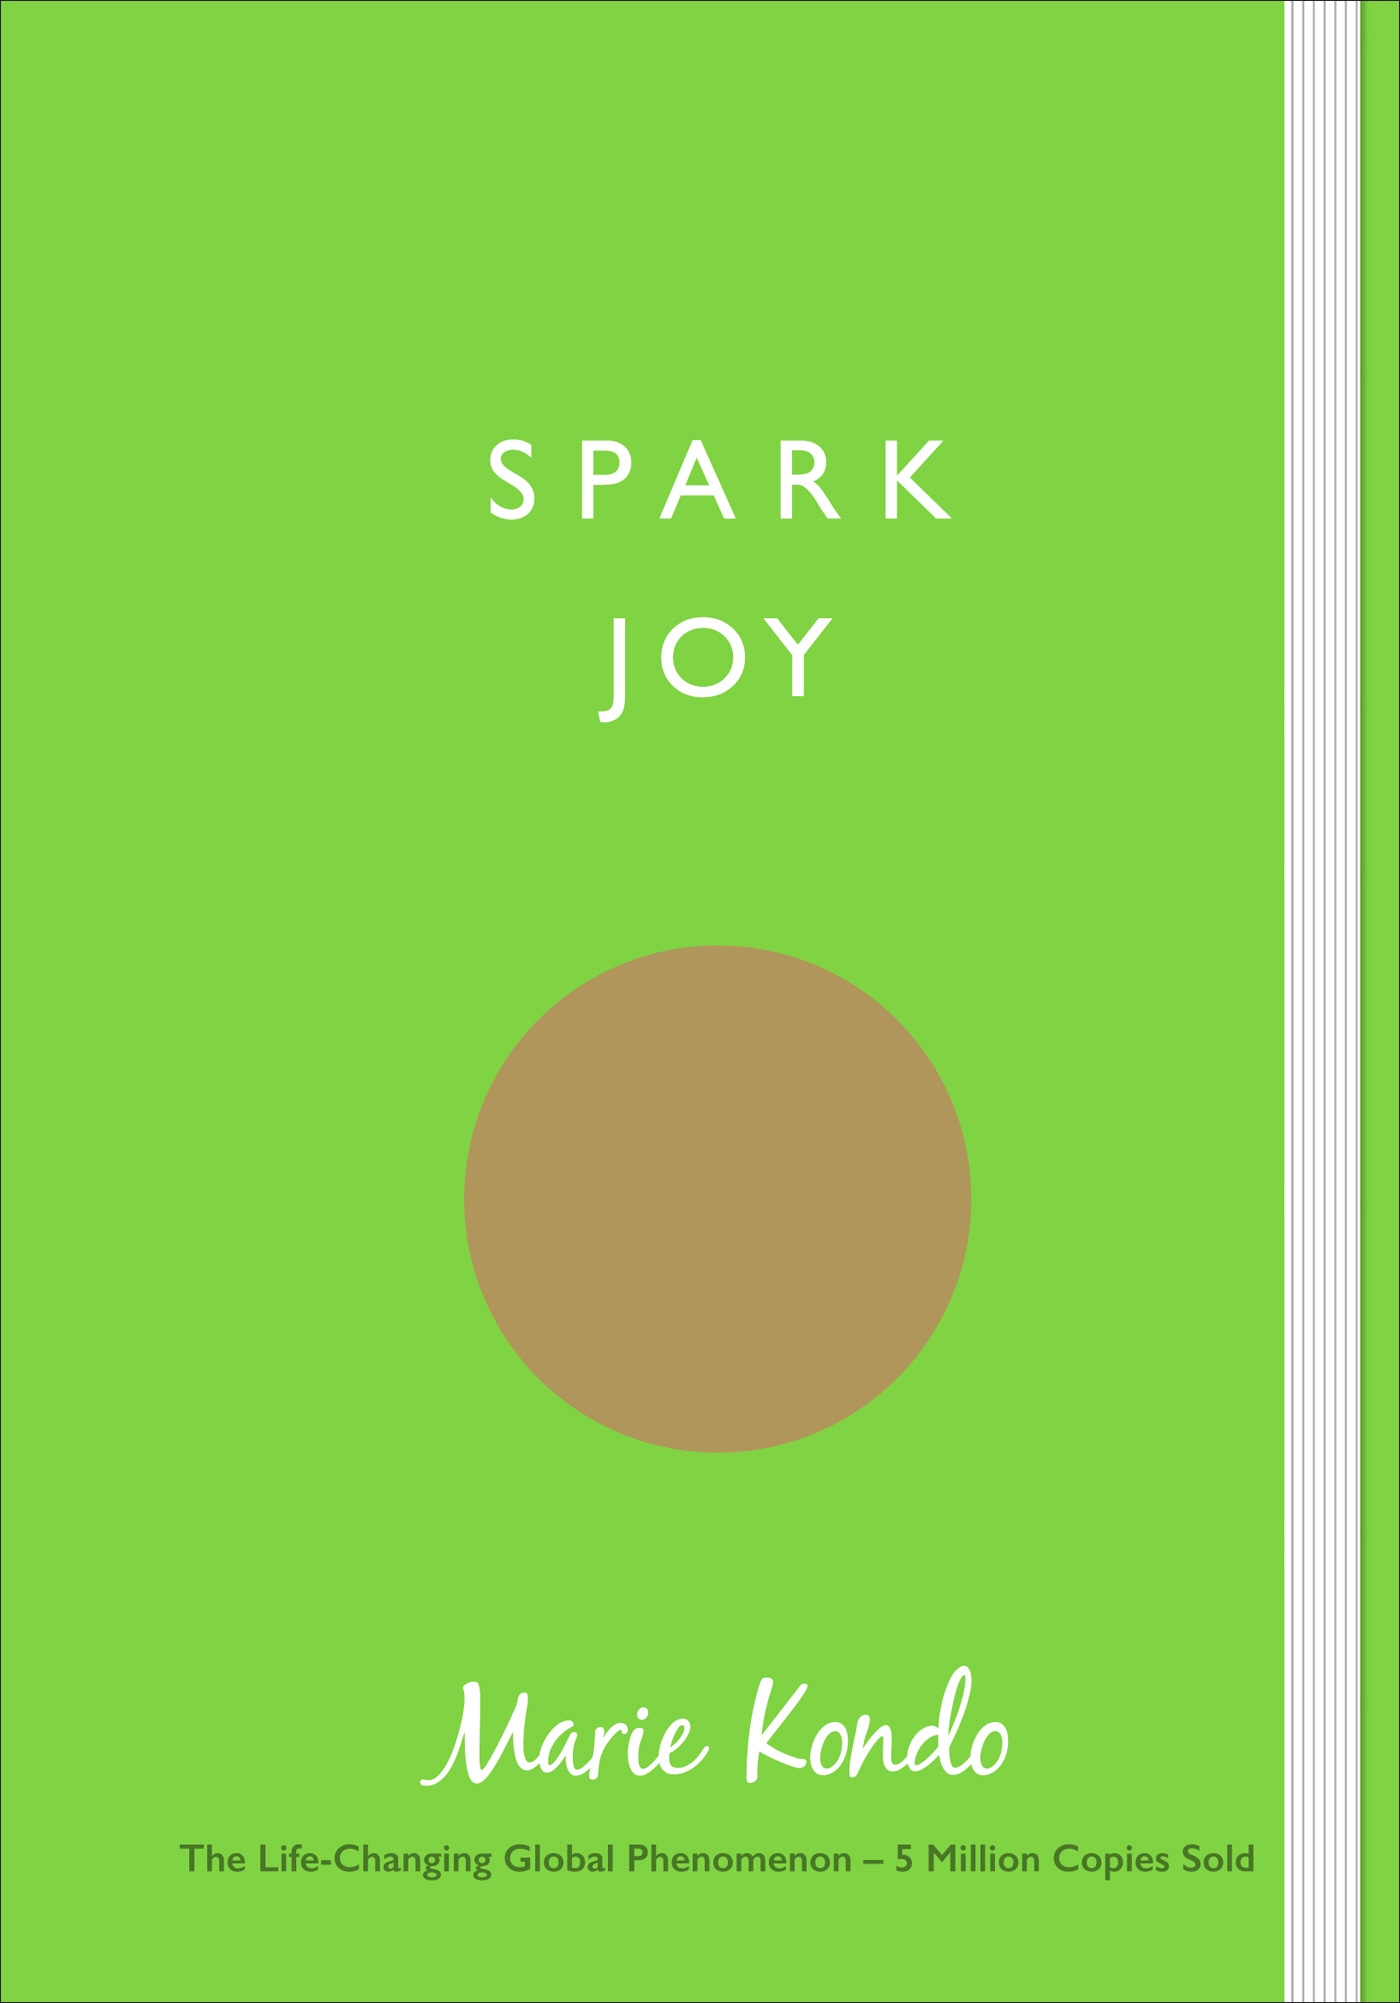 Book “Spark Joy” by Marie Kondo — January 5, 2017